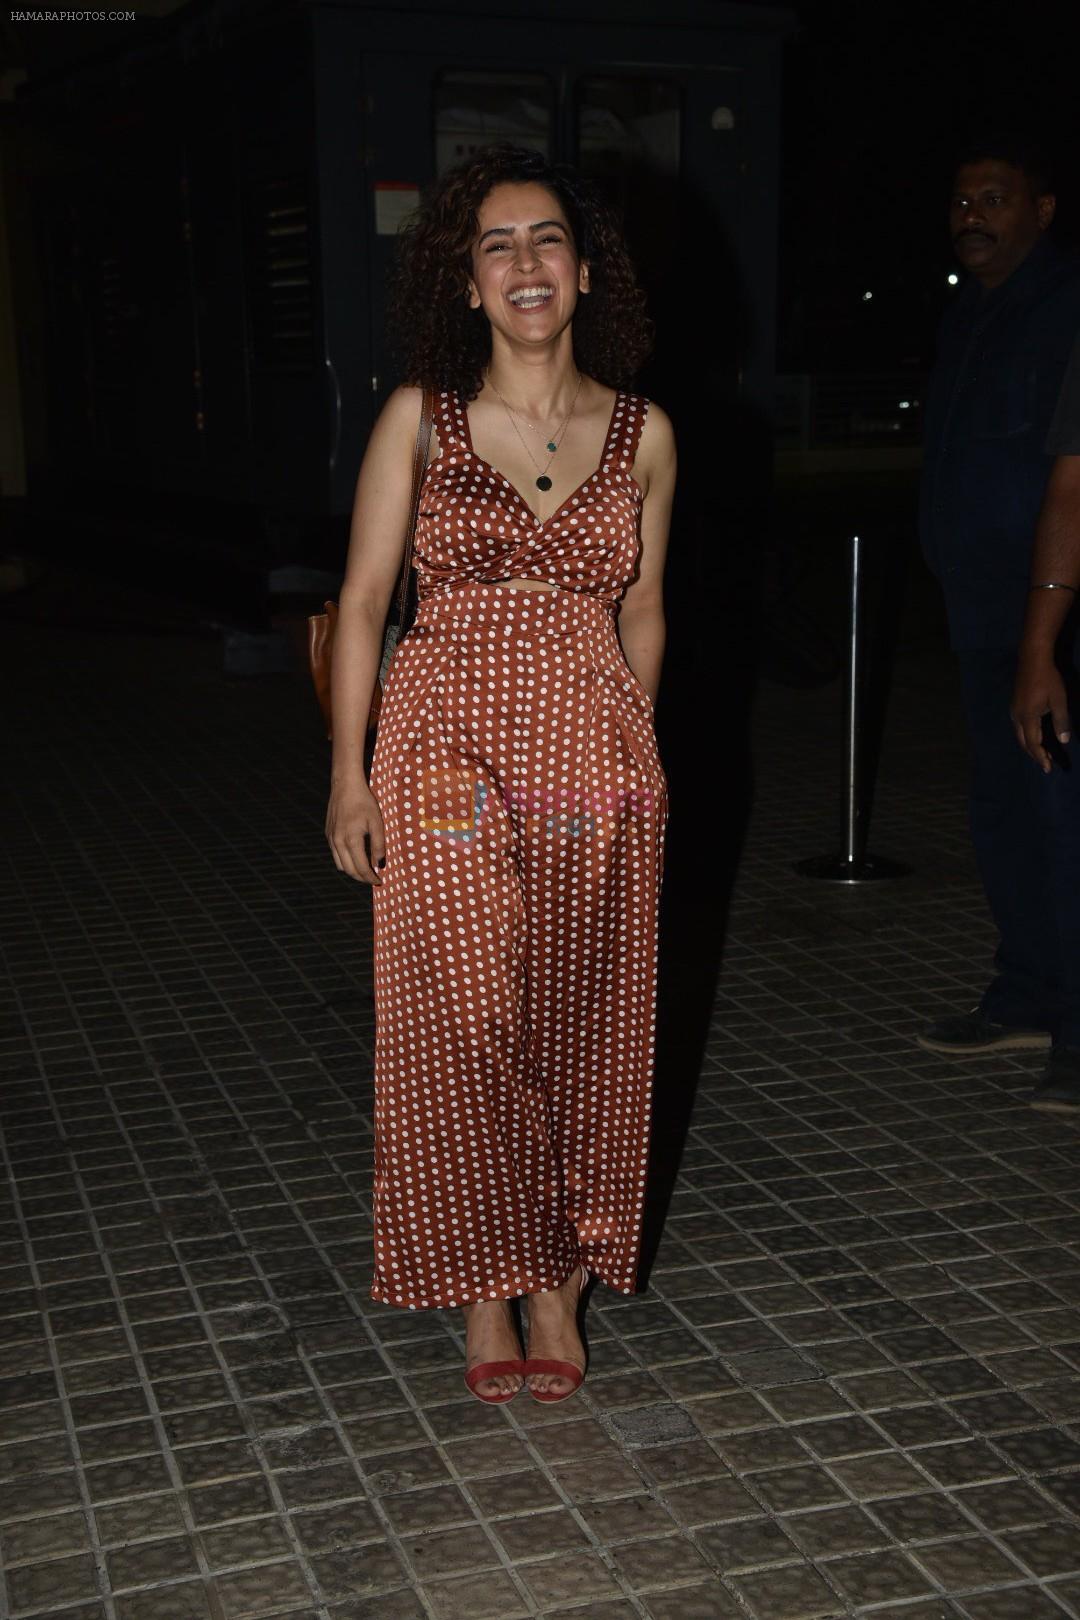 Sanya Malhotra at the Screening of movie photograph on 13th March 2019